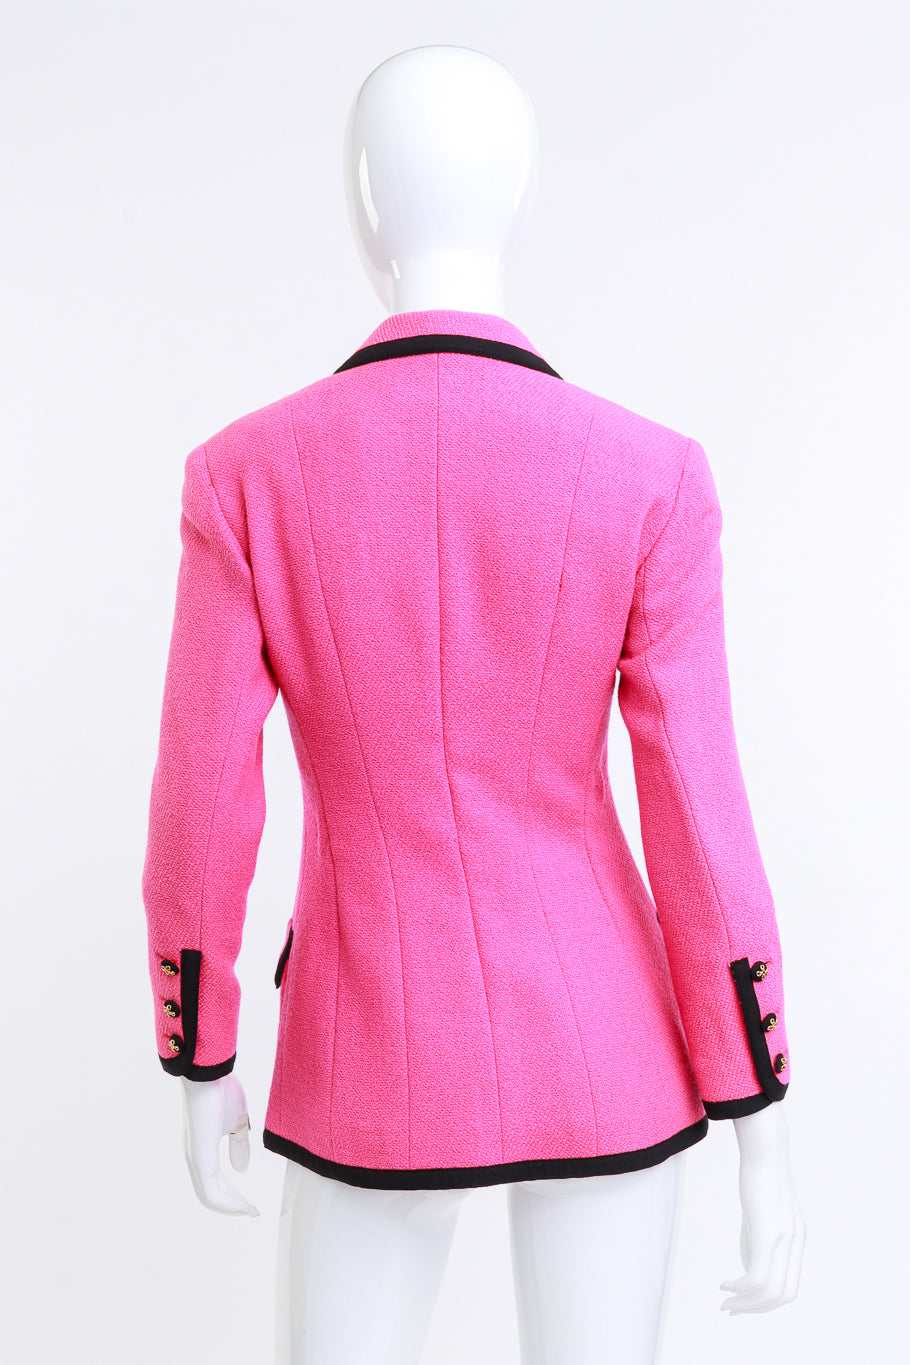 Chanel 1991 S/S Collection 25 Fuchsia Boucle Jacket back mannequin @RECESS LA